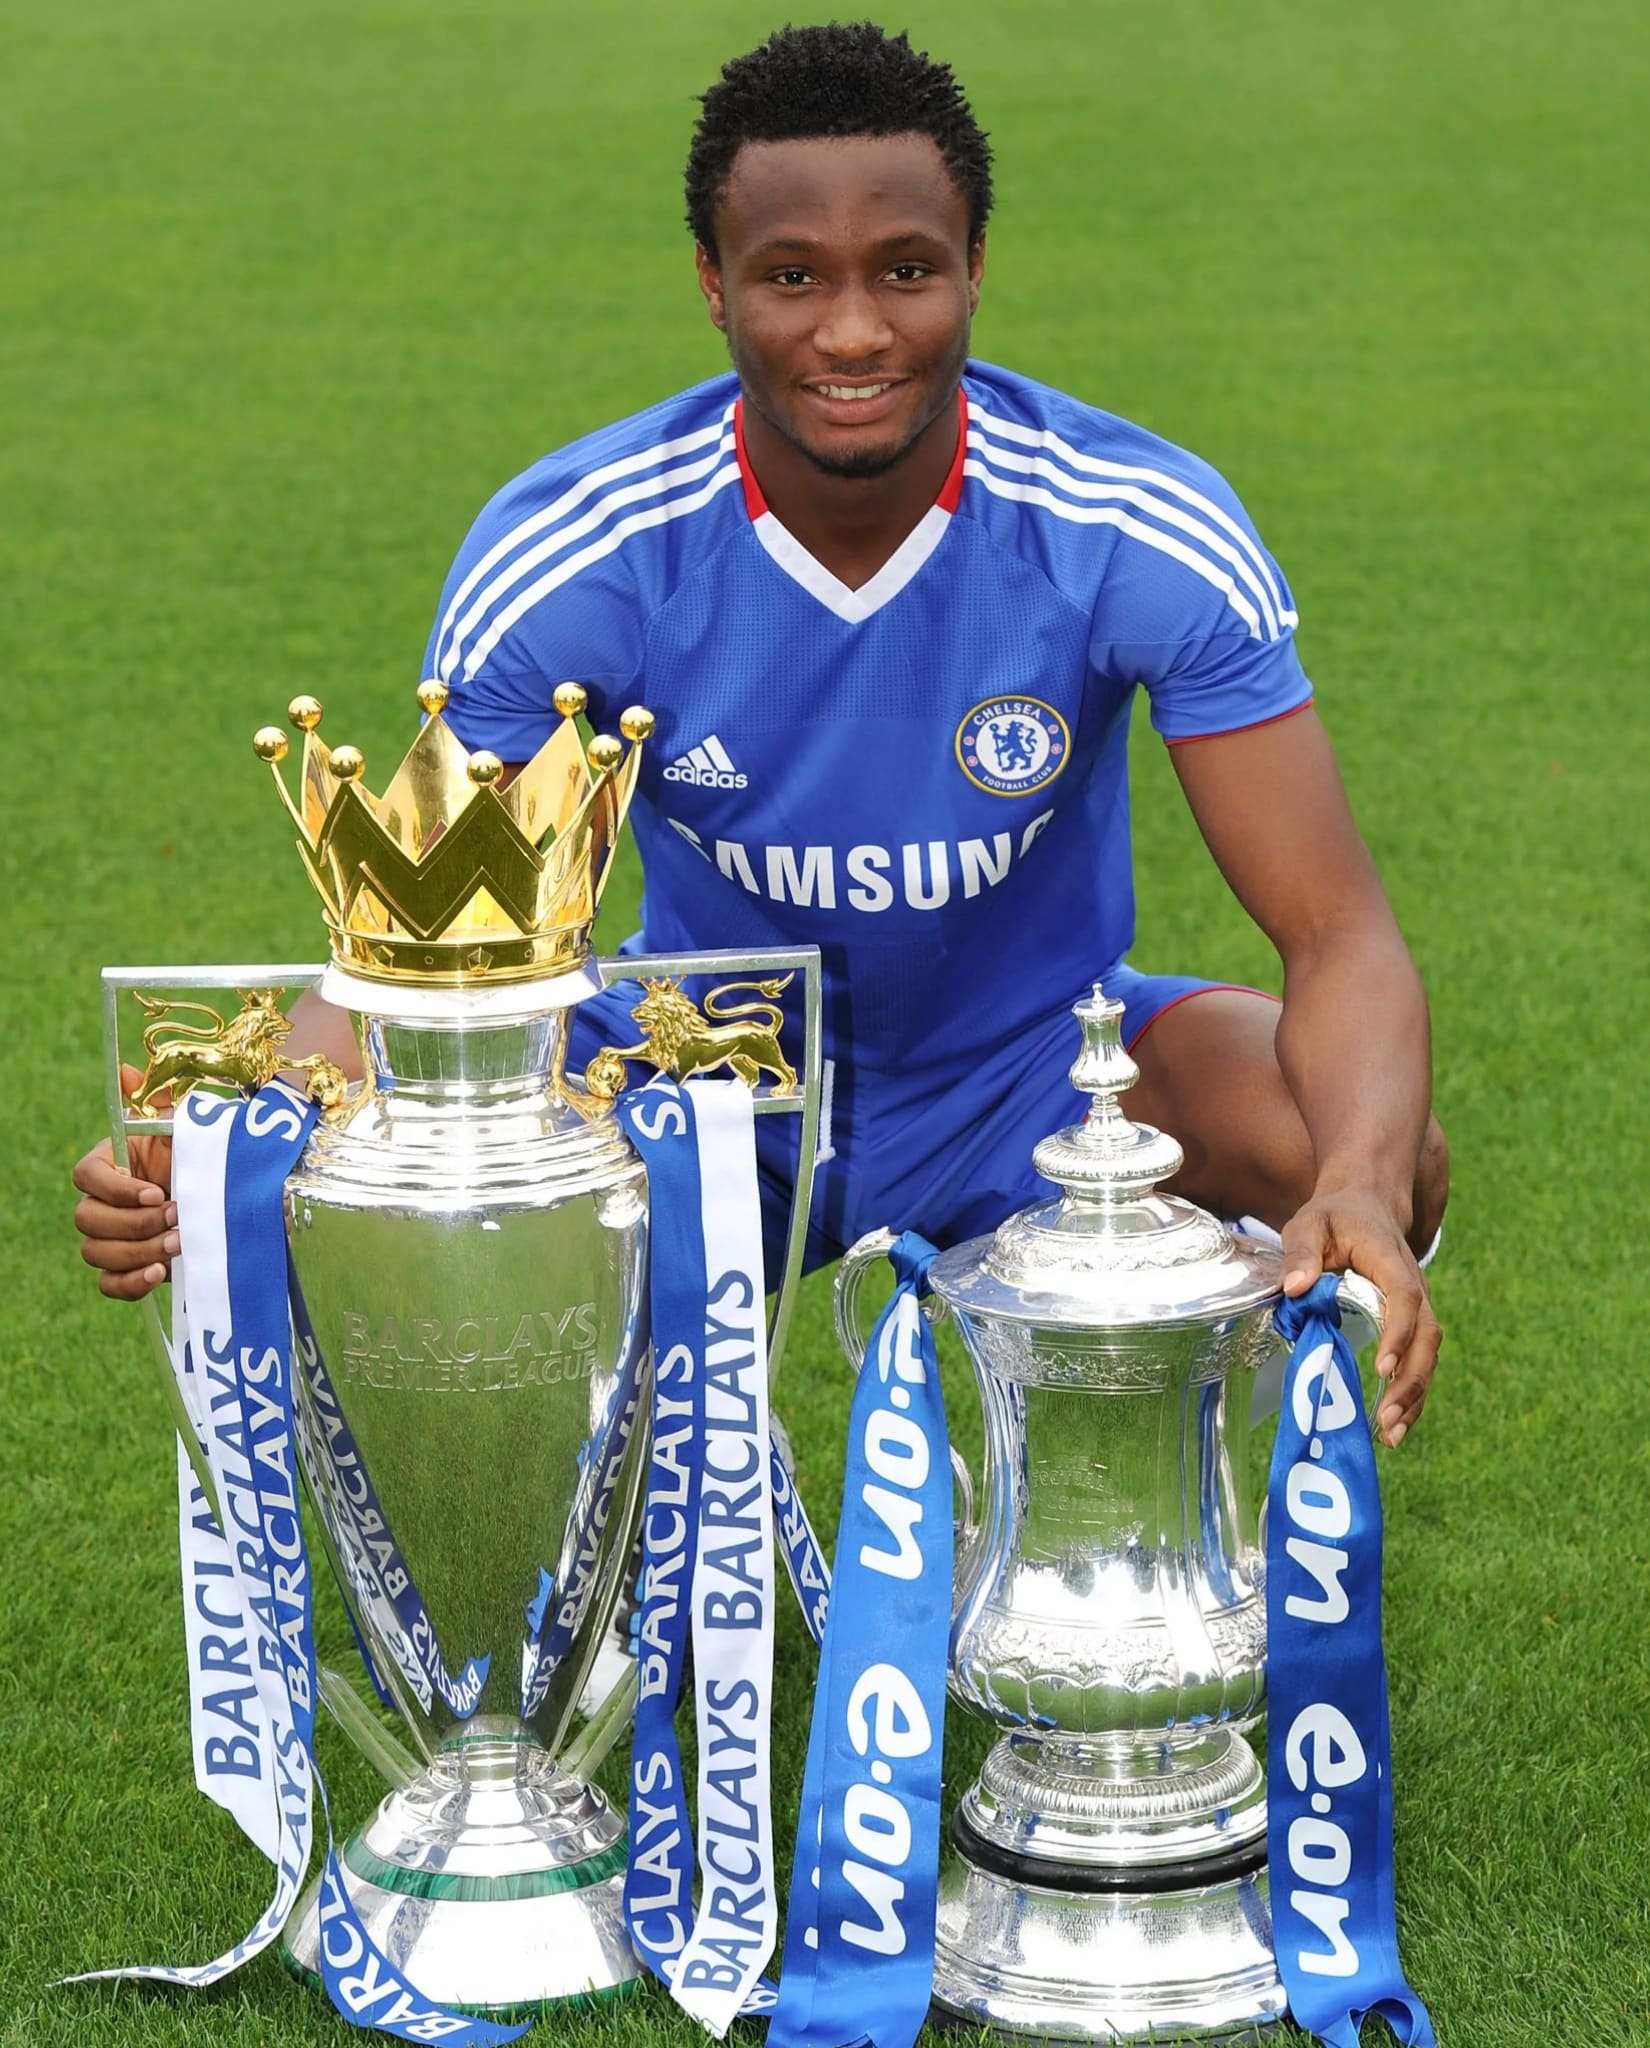 "A true legend" - Chelsea celebrates Mikel Obi at 37